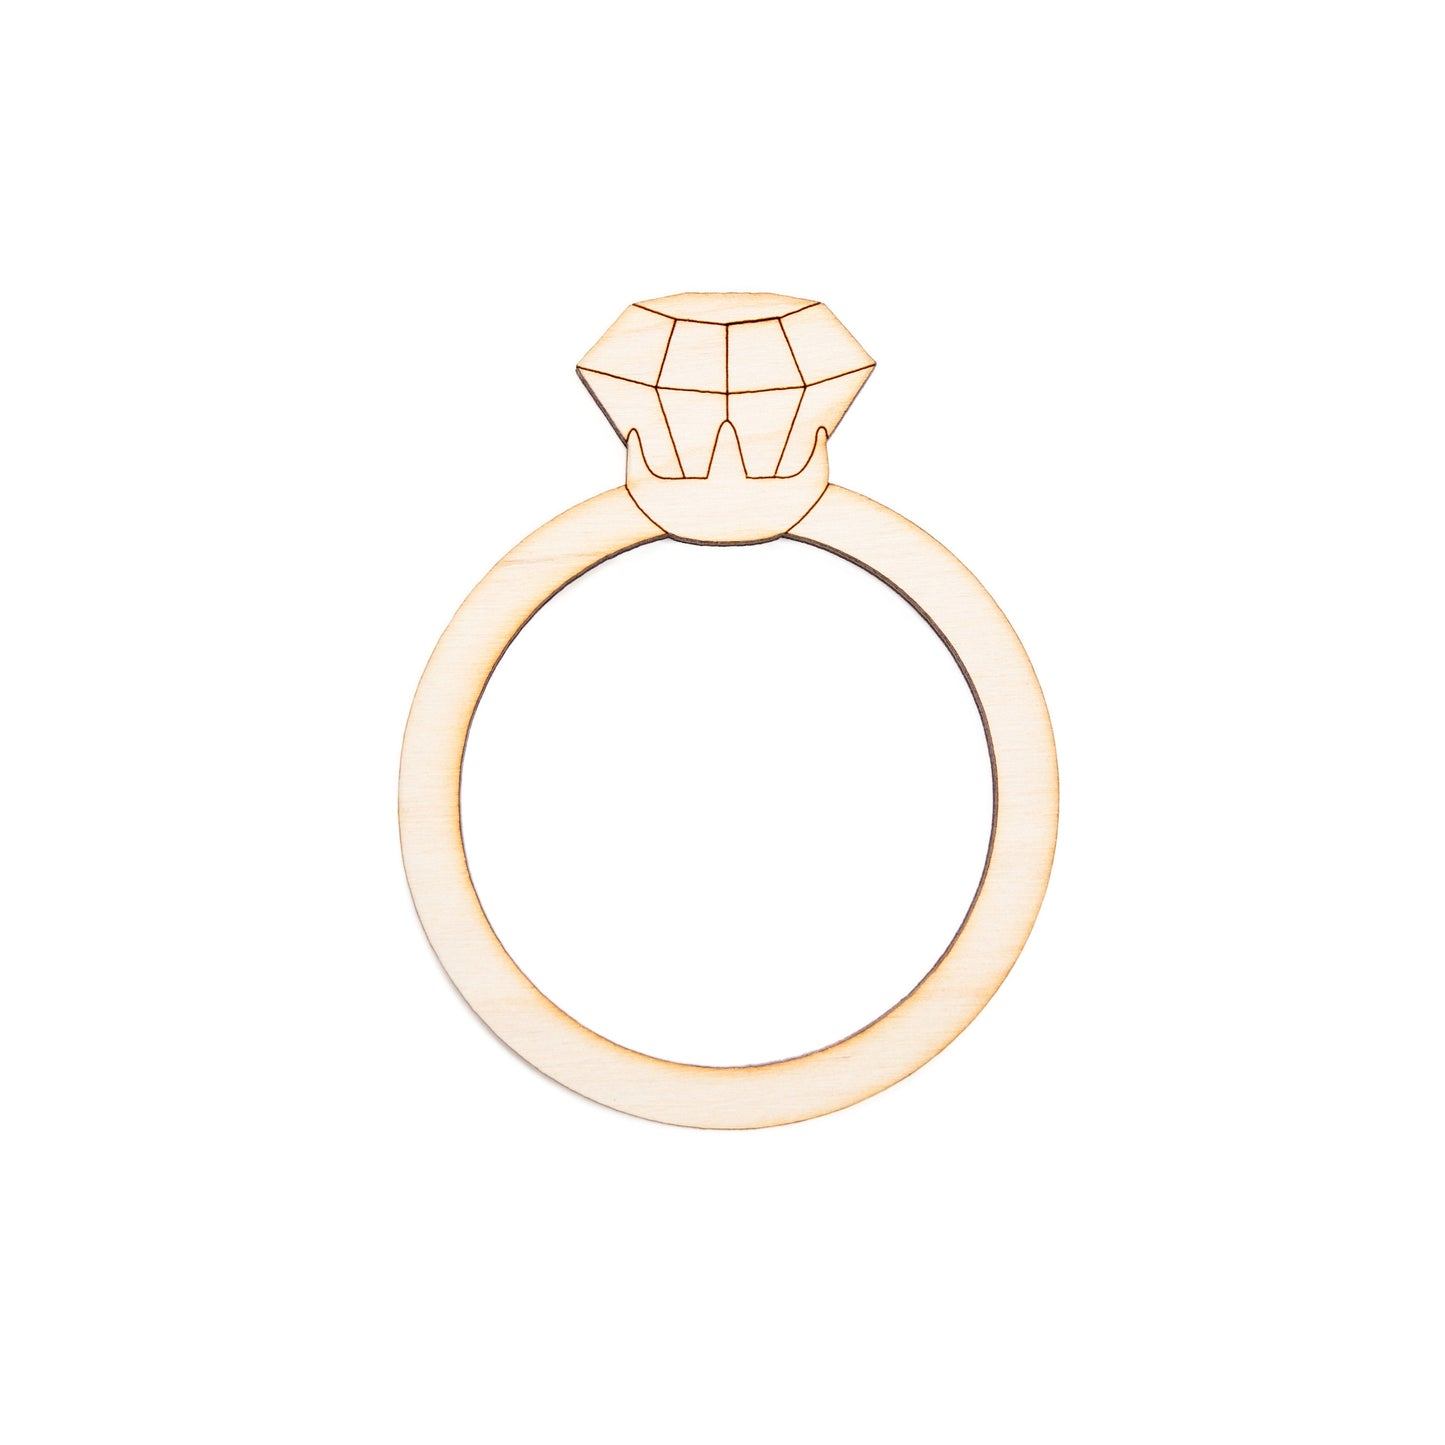 Diamond Ring Wood Cutout-Engagement Decor-Wedding Wood Accents-Various Sizes-DIY Wedding Crafts-Engagement Embellishments-Wood Ring-Bling